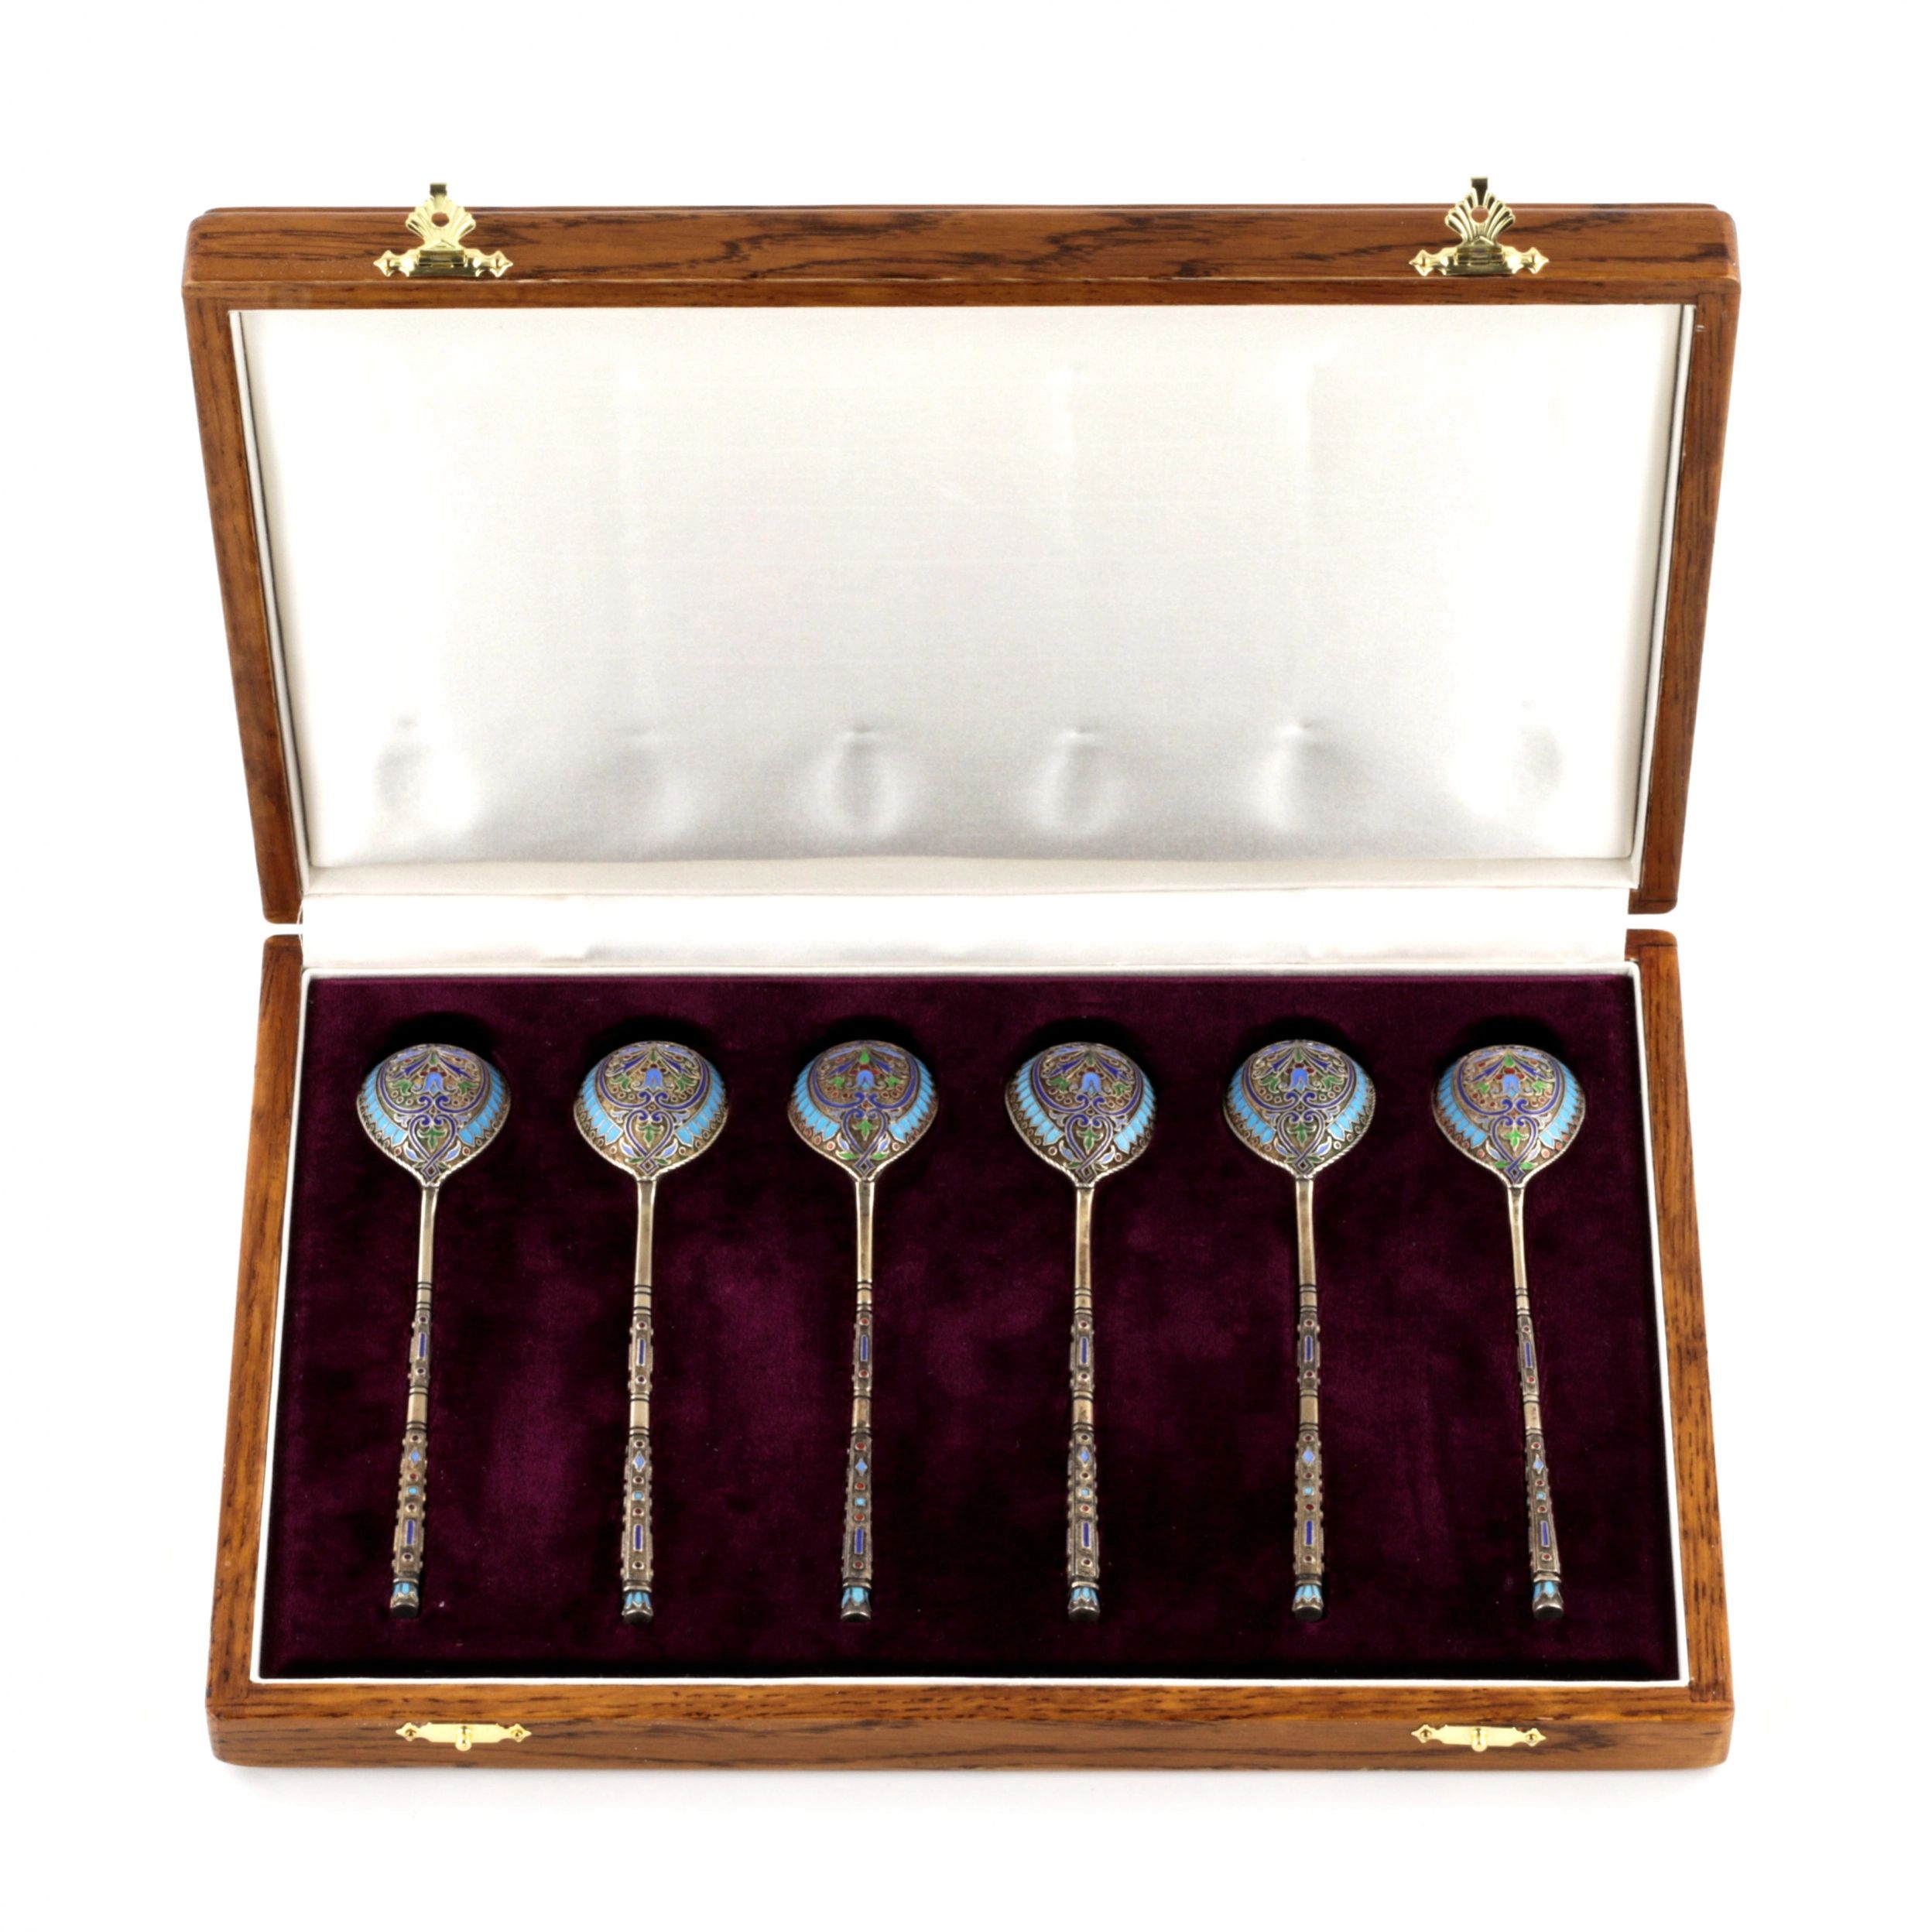 A-set-of-6-teaspoons-from-Grachevs-Factory--in-original-case